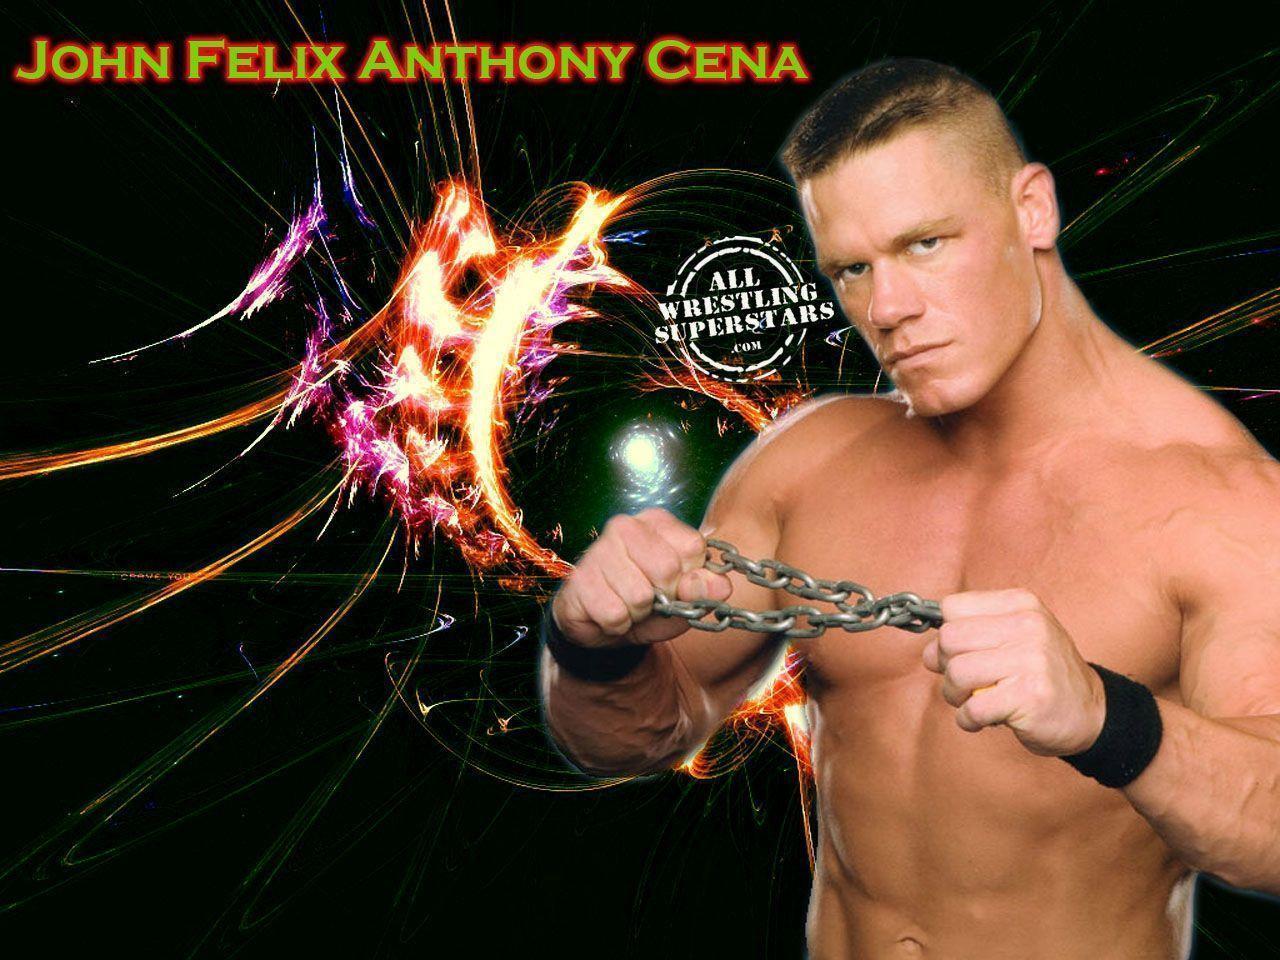 Wallpaper For > Wwe John Cena Wallpaper 2012 Pink